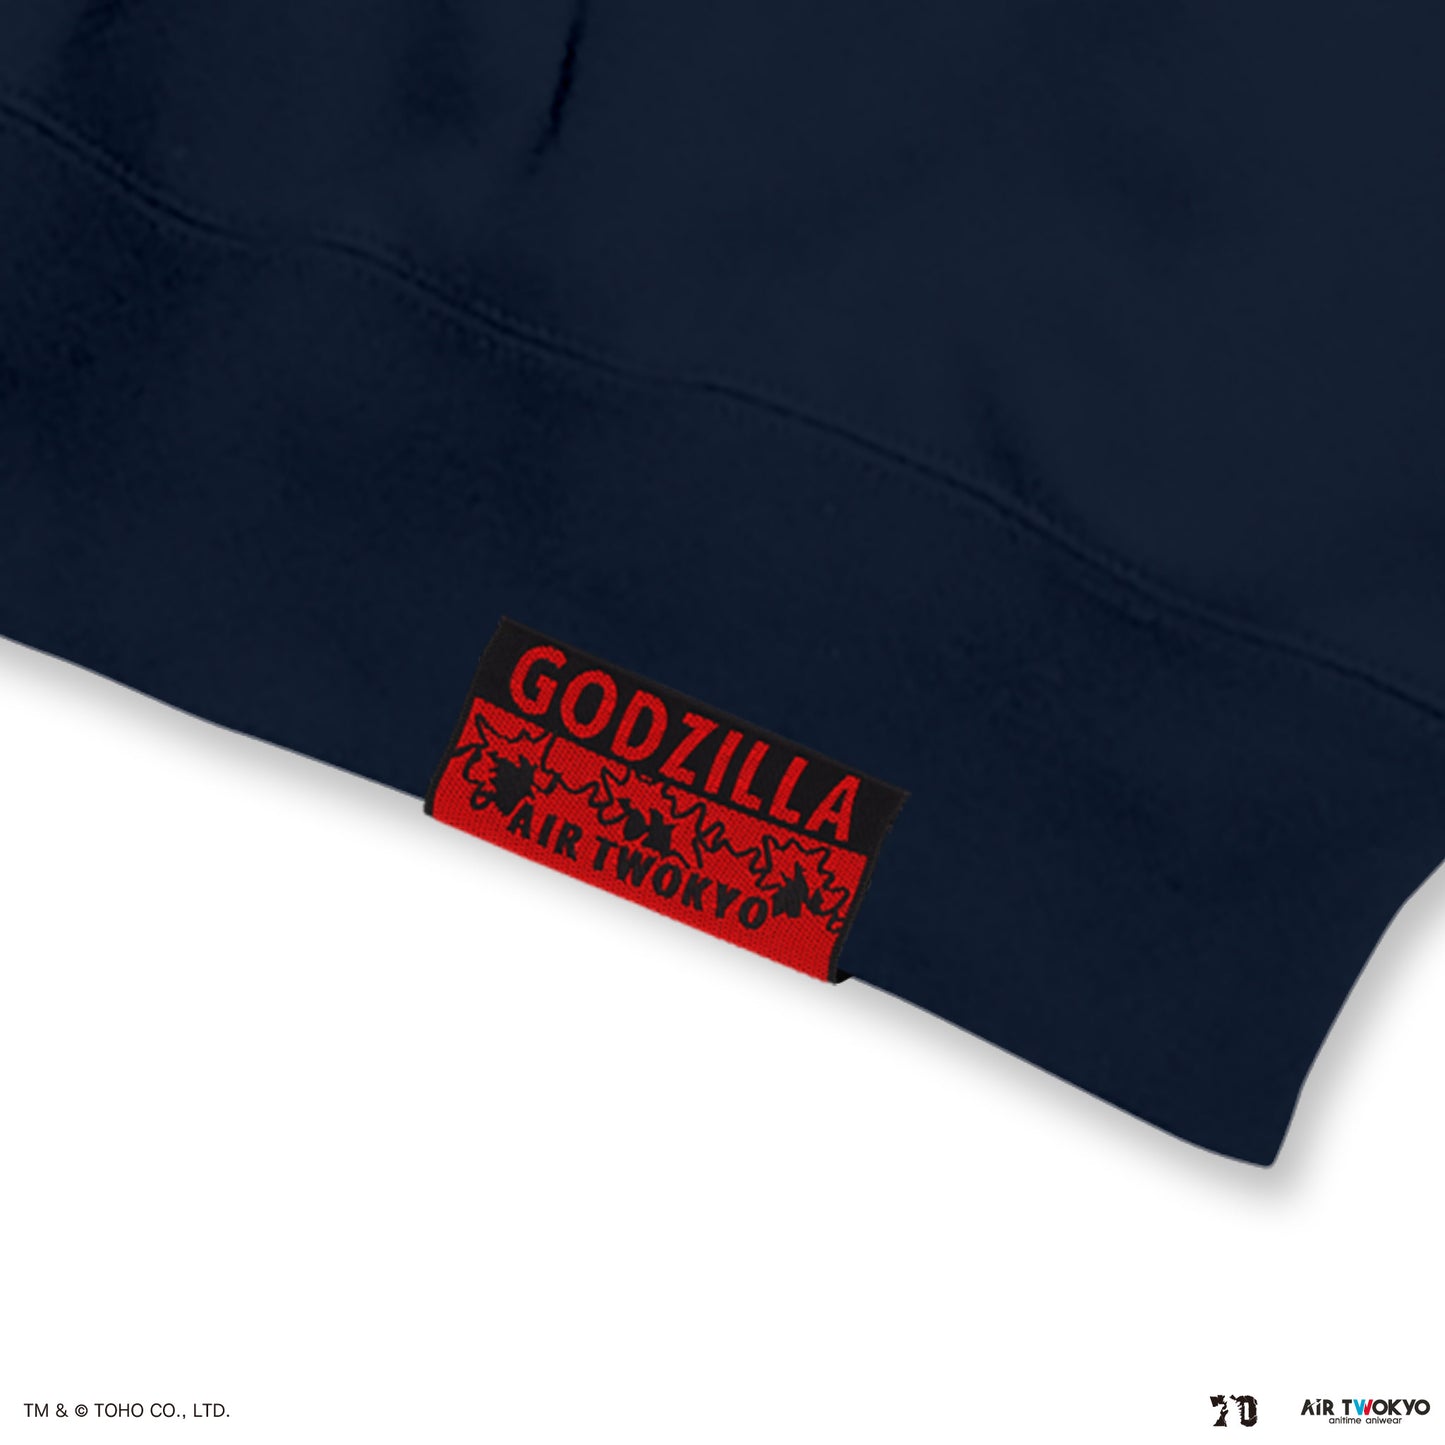 GODZILLA 70th Anniversary "Godzilla Minus One" Scene Illustration Sweatshirt　2(SHINSEIMARU）